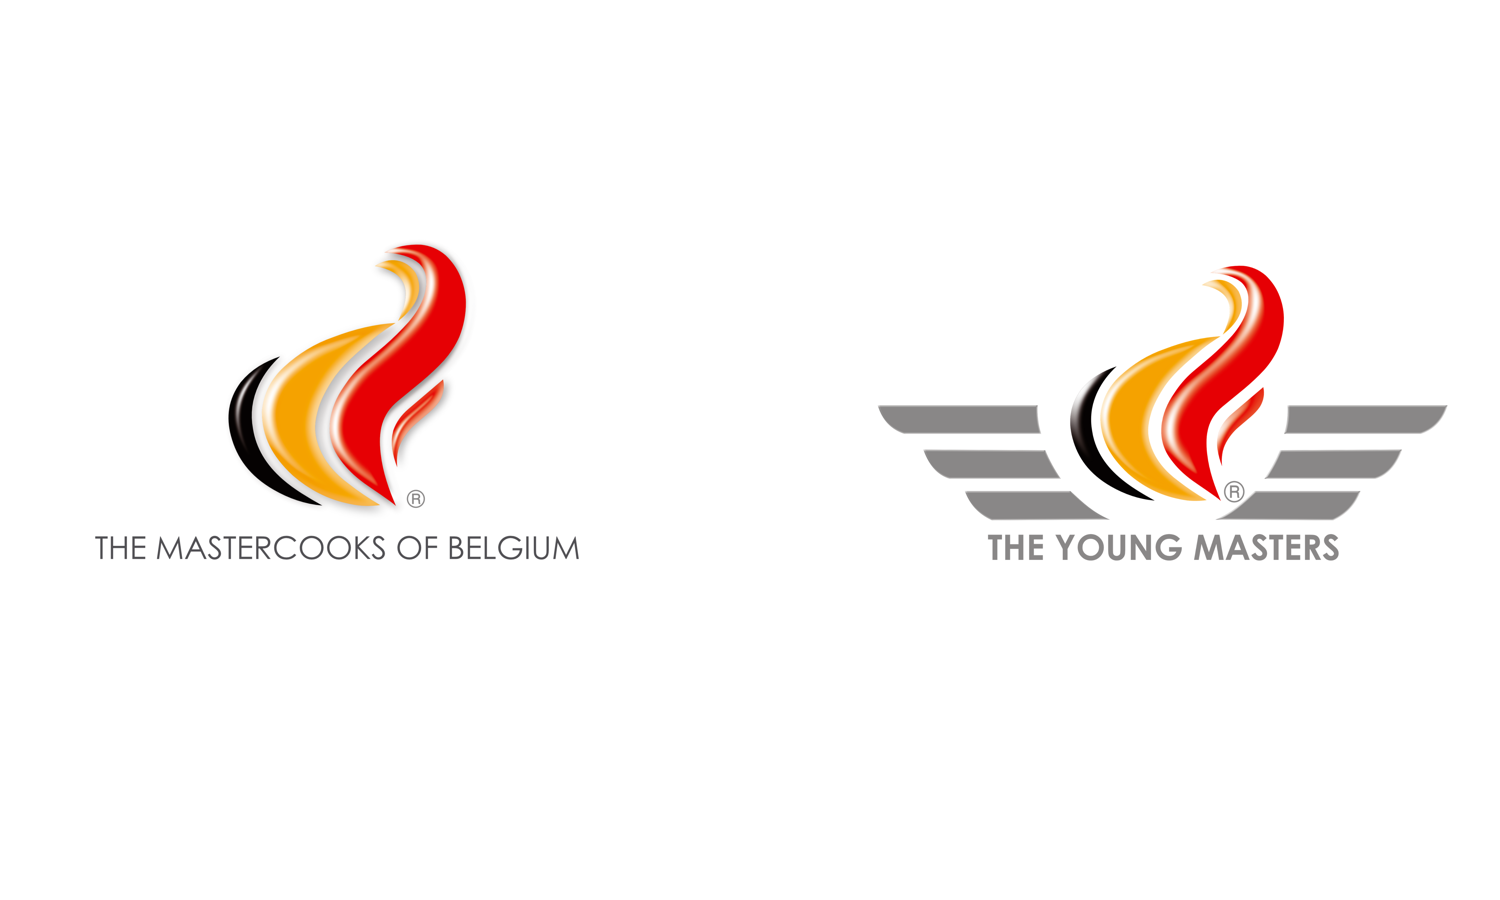 The Mastercooks of Belgium - The Young Mastercooks